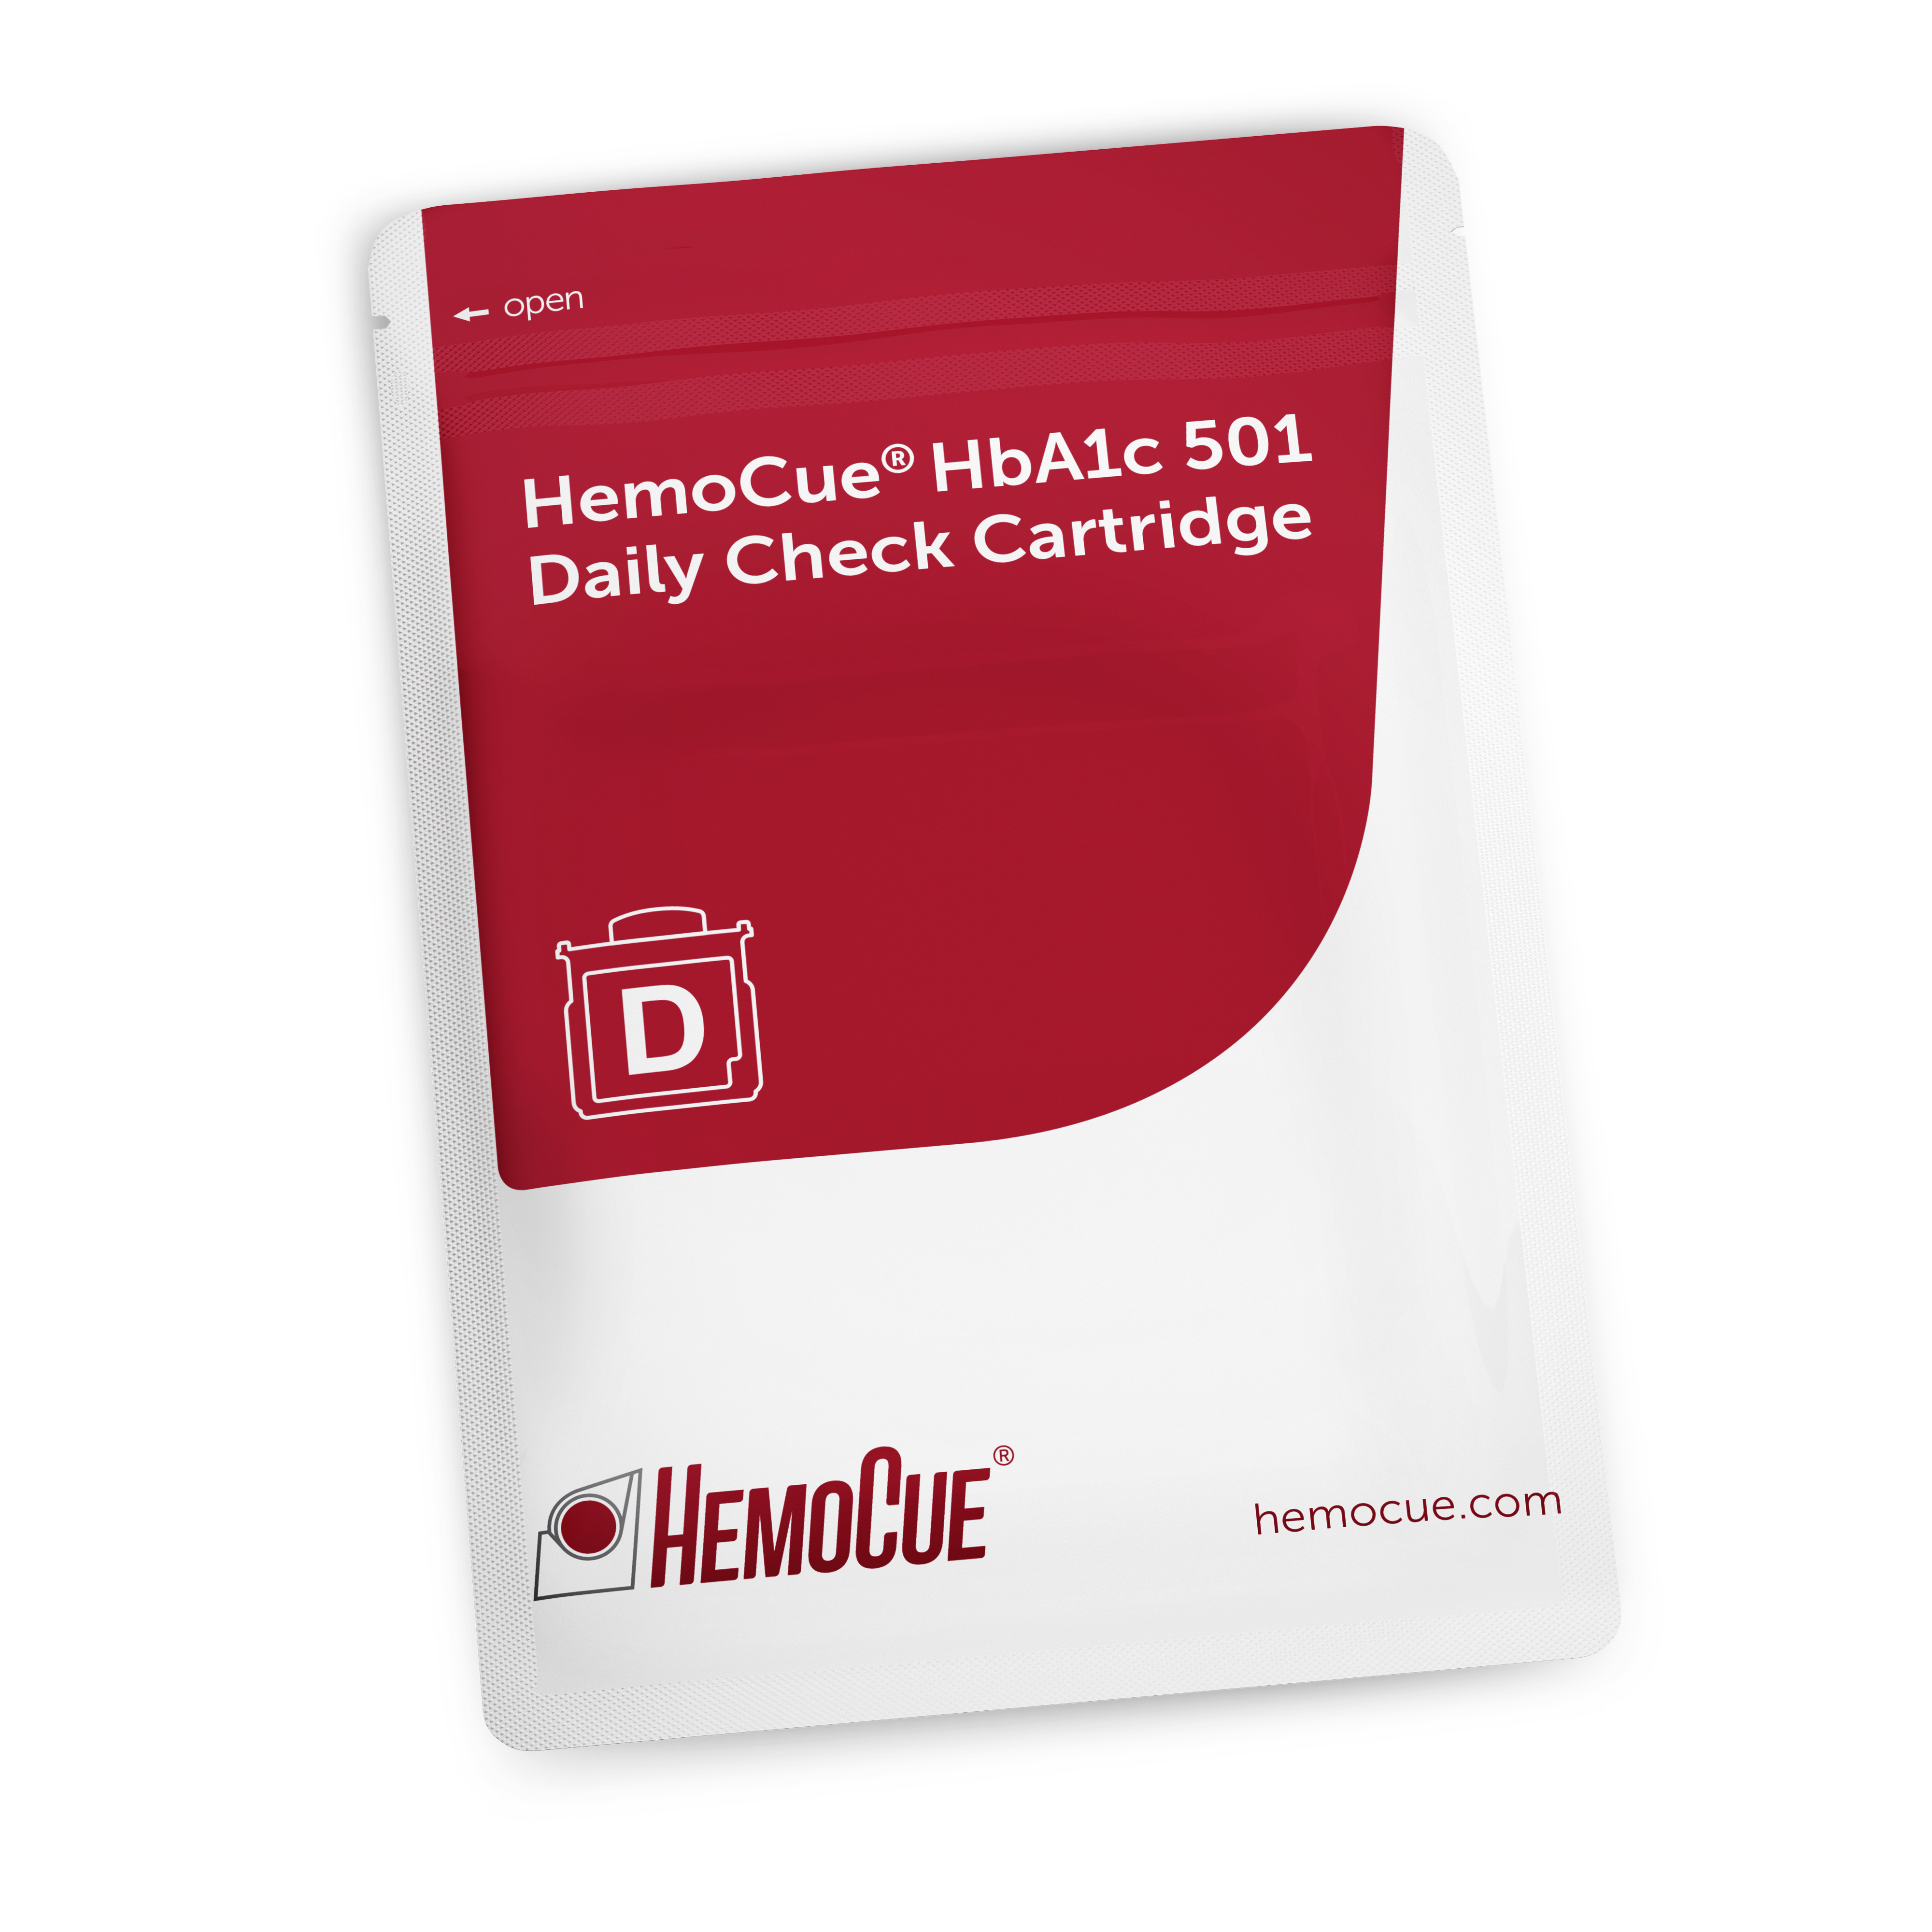 HemoCue® HbA1c 501 Daily Check Cartridge